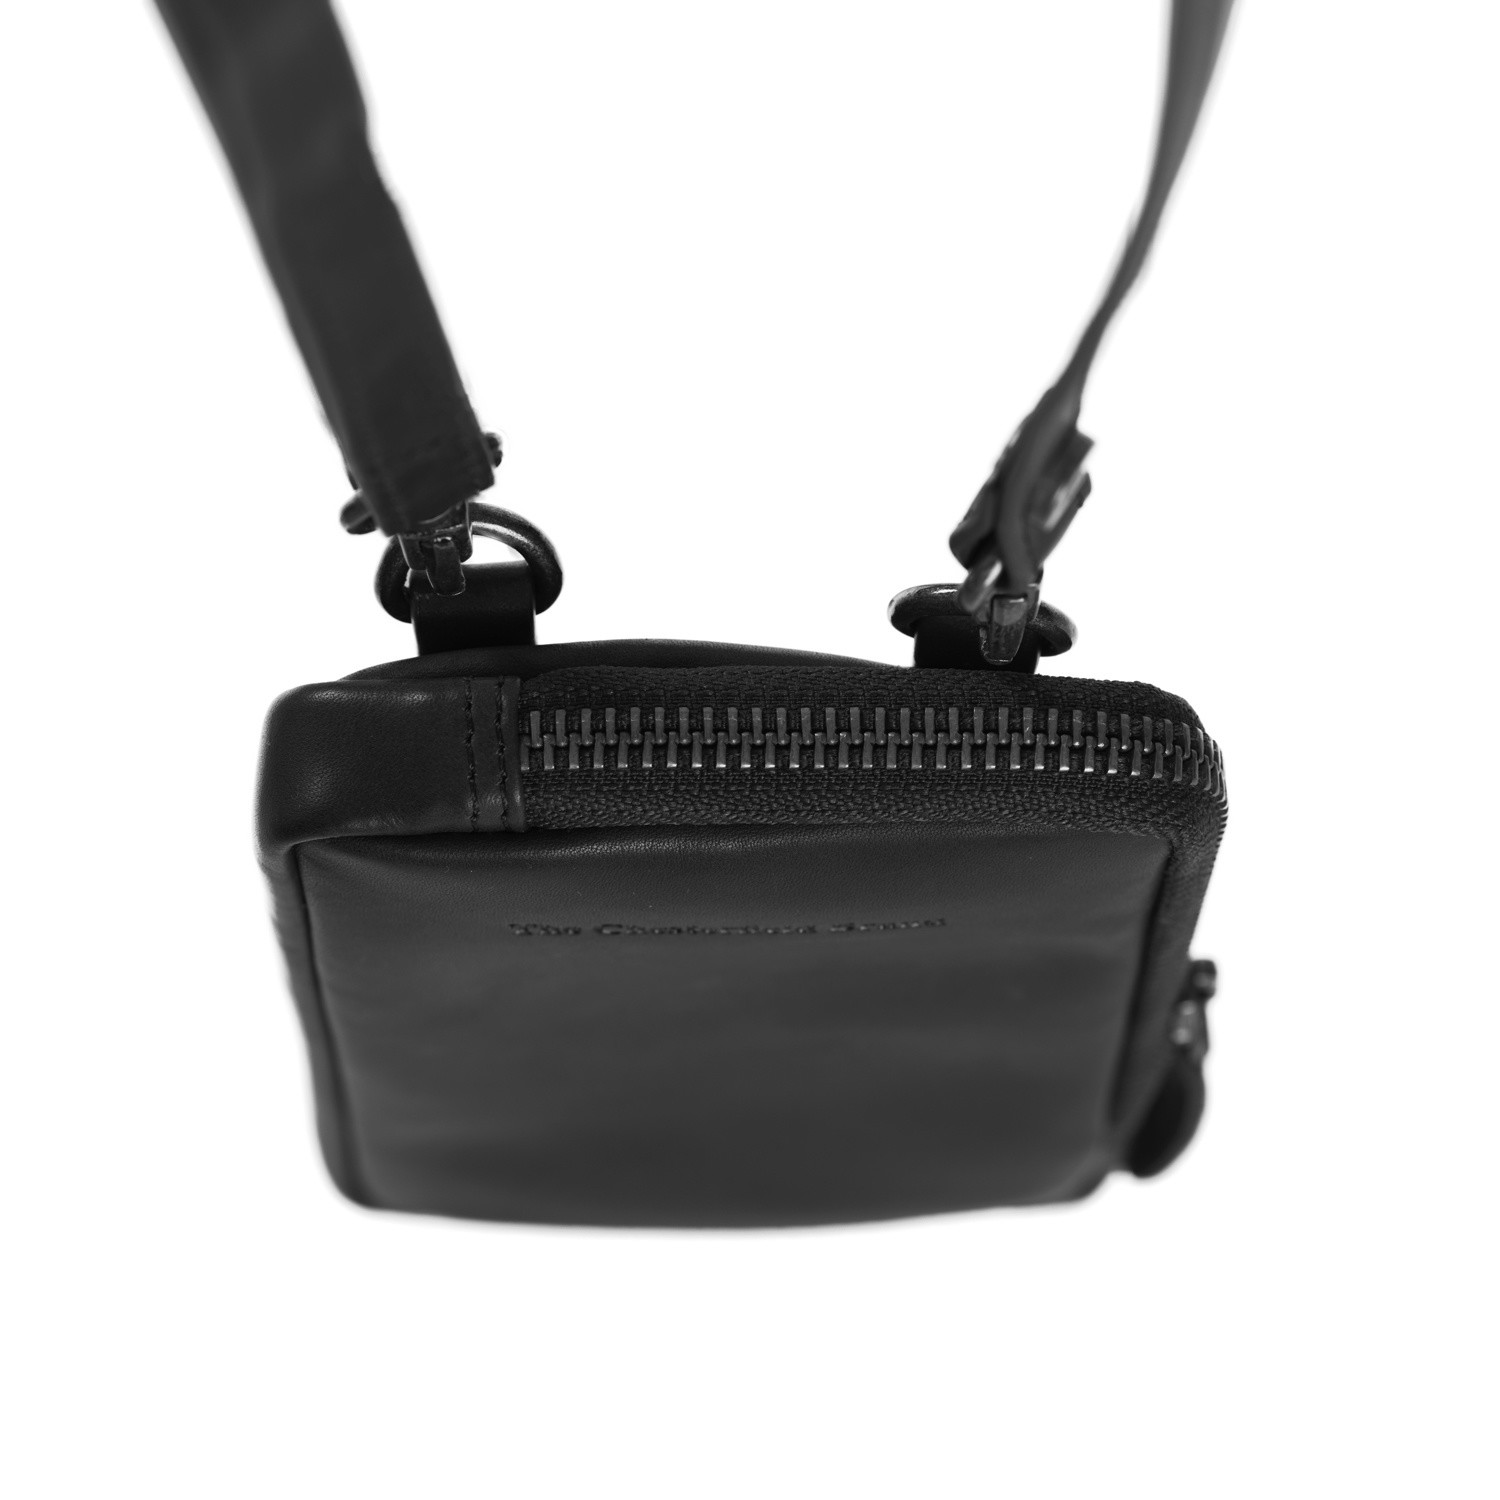 Phone Pouch - Black Leather Handbag